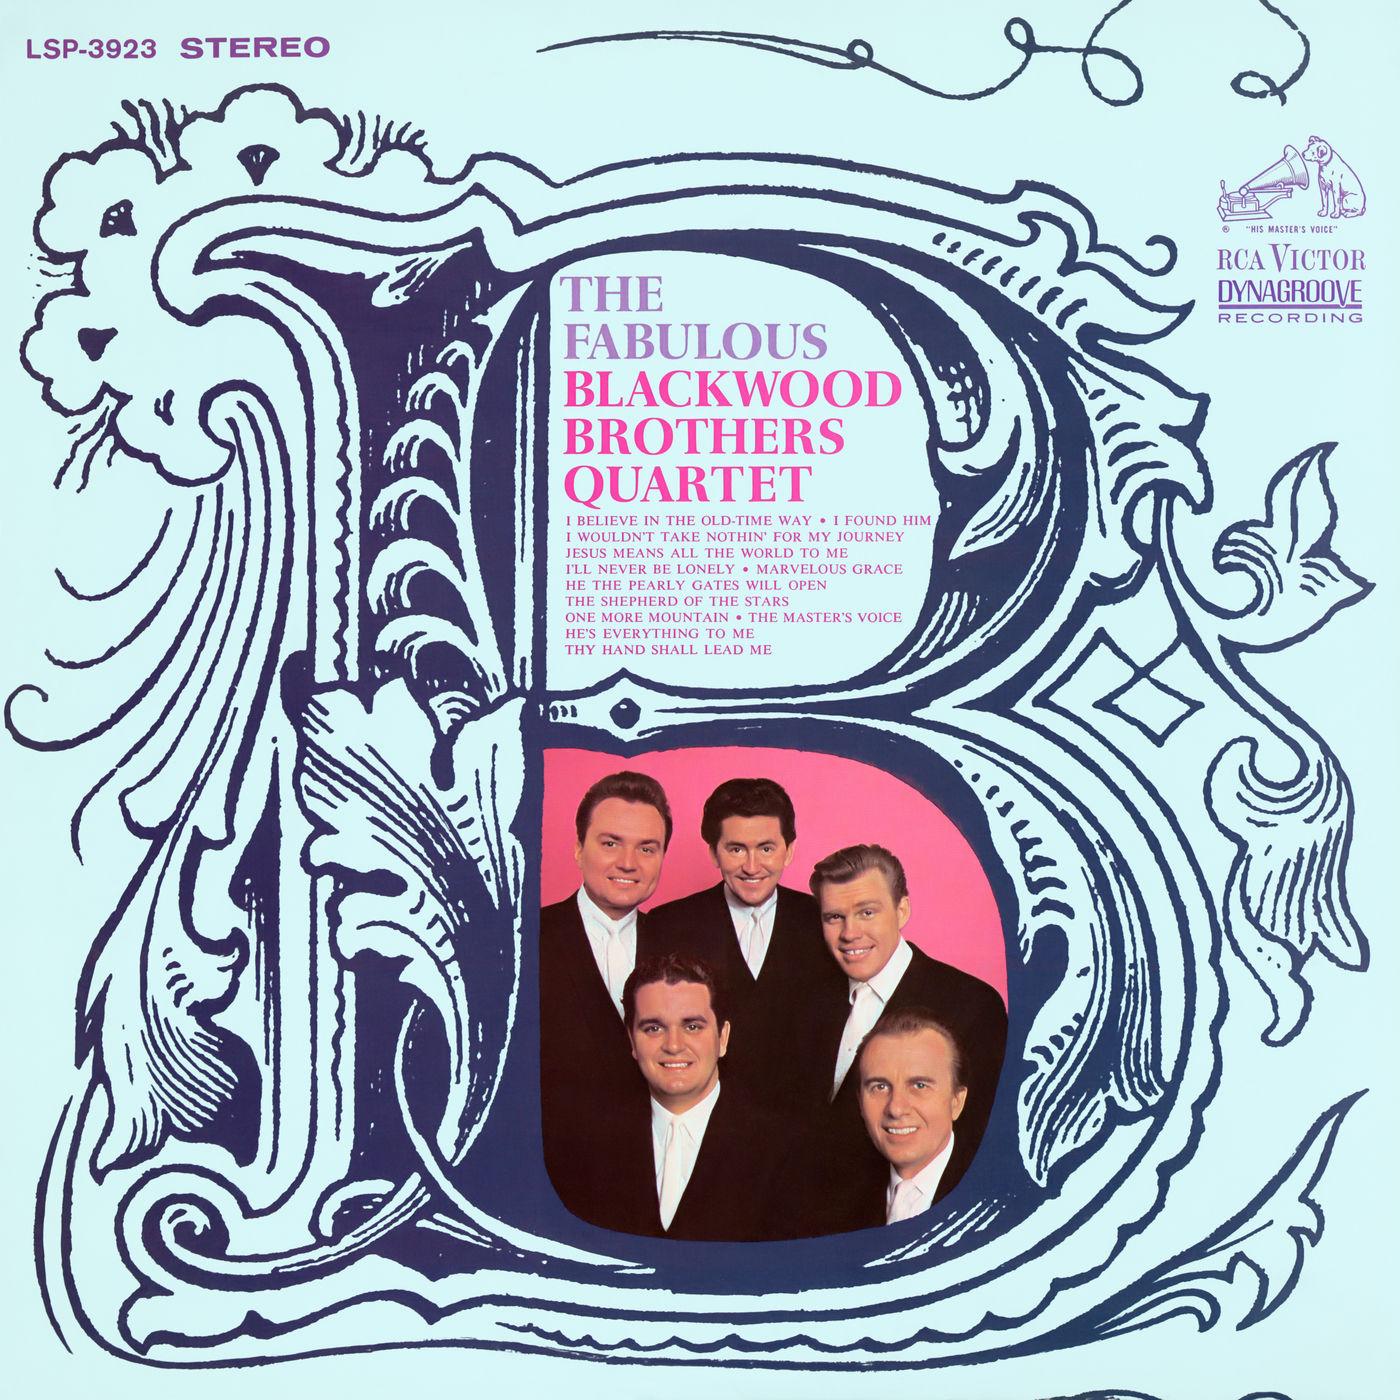 The Blackwood Brothers Quartet – The Fabulous Blackwood Brothers Quartet